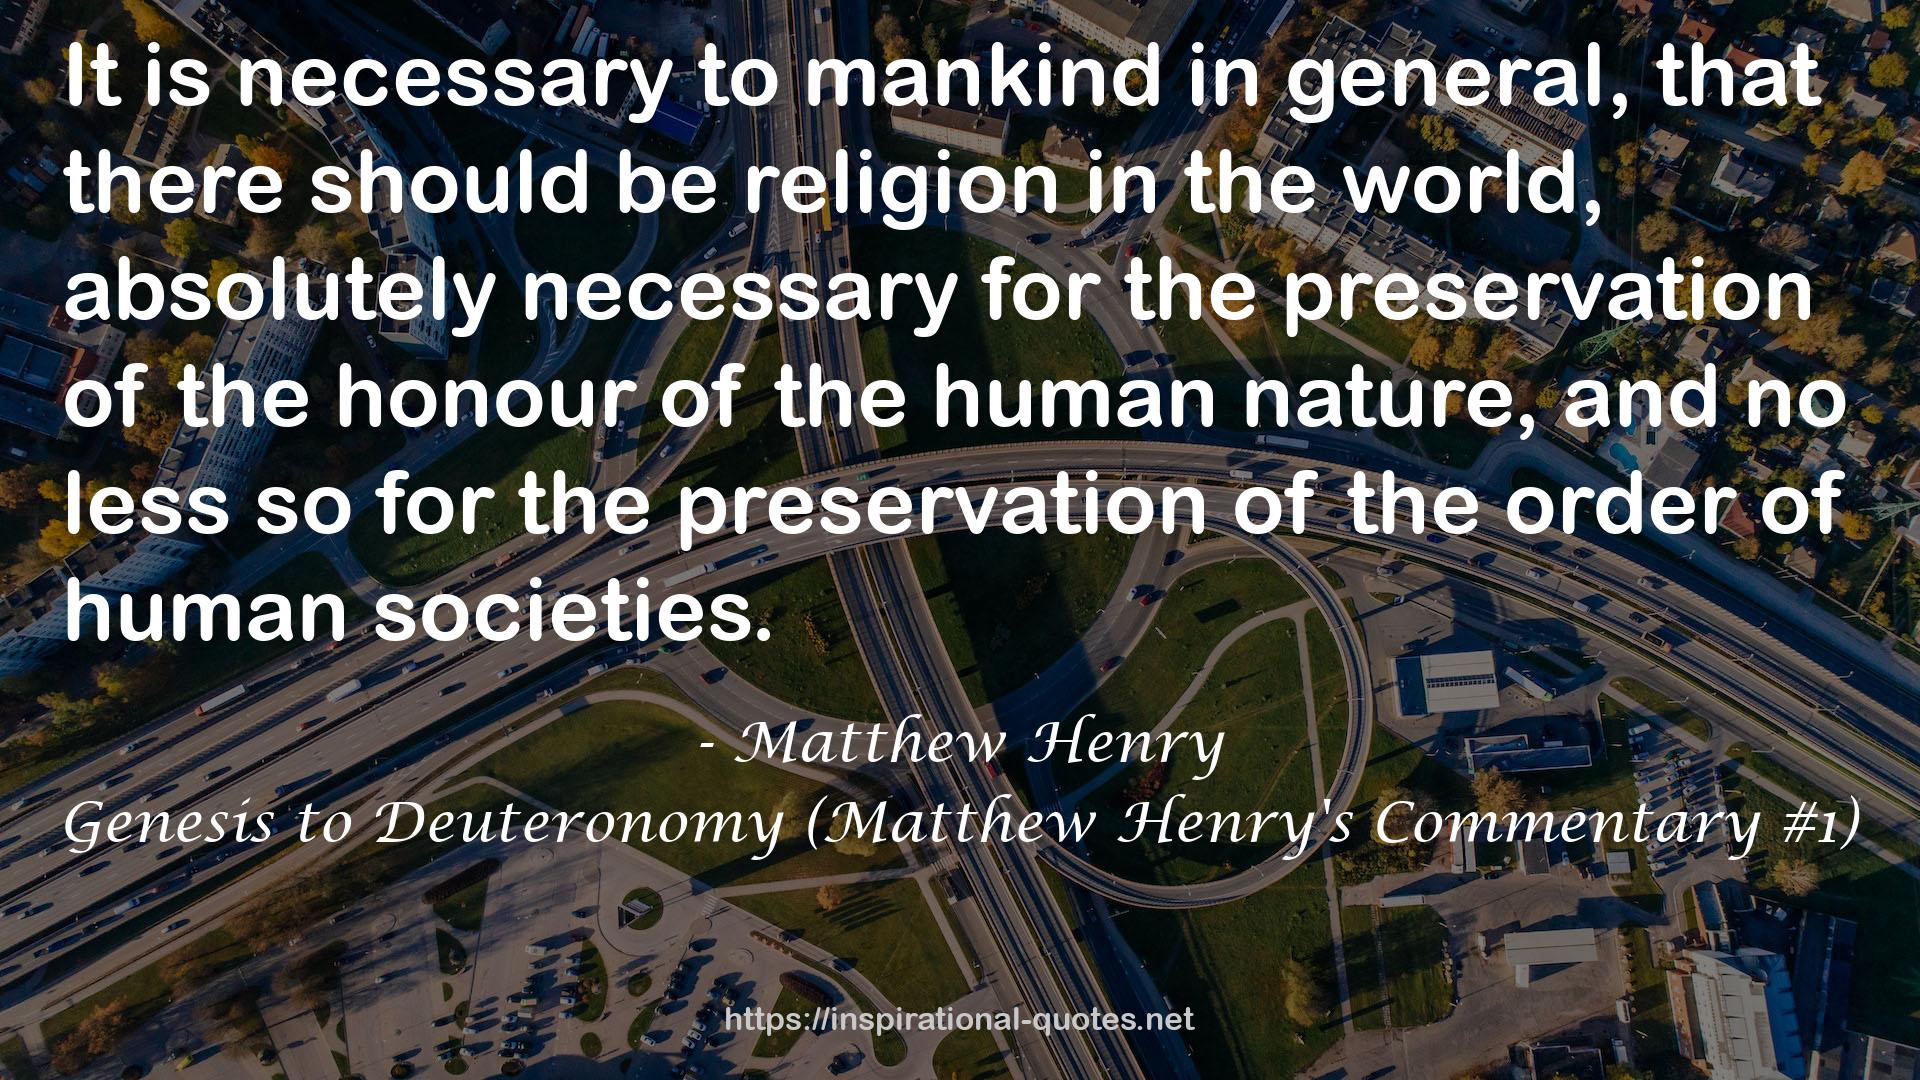 Genesis to Deuteronomy (Matthew Henry's Commentary #1) QUOTES